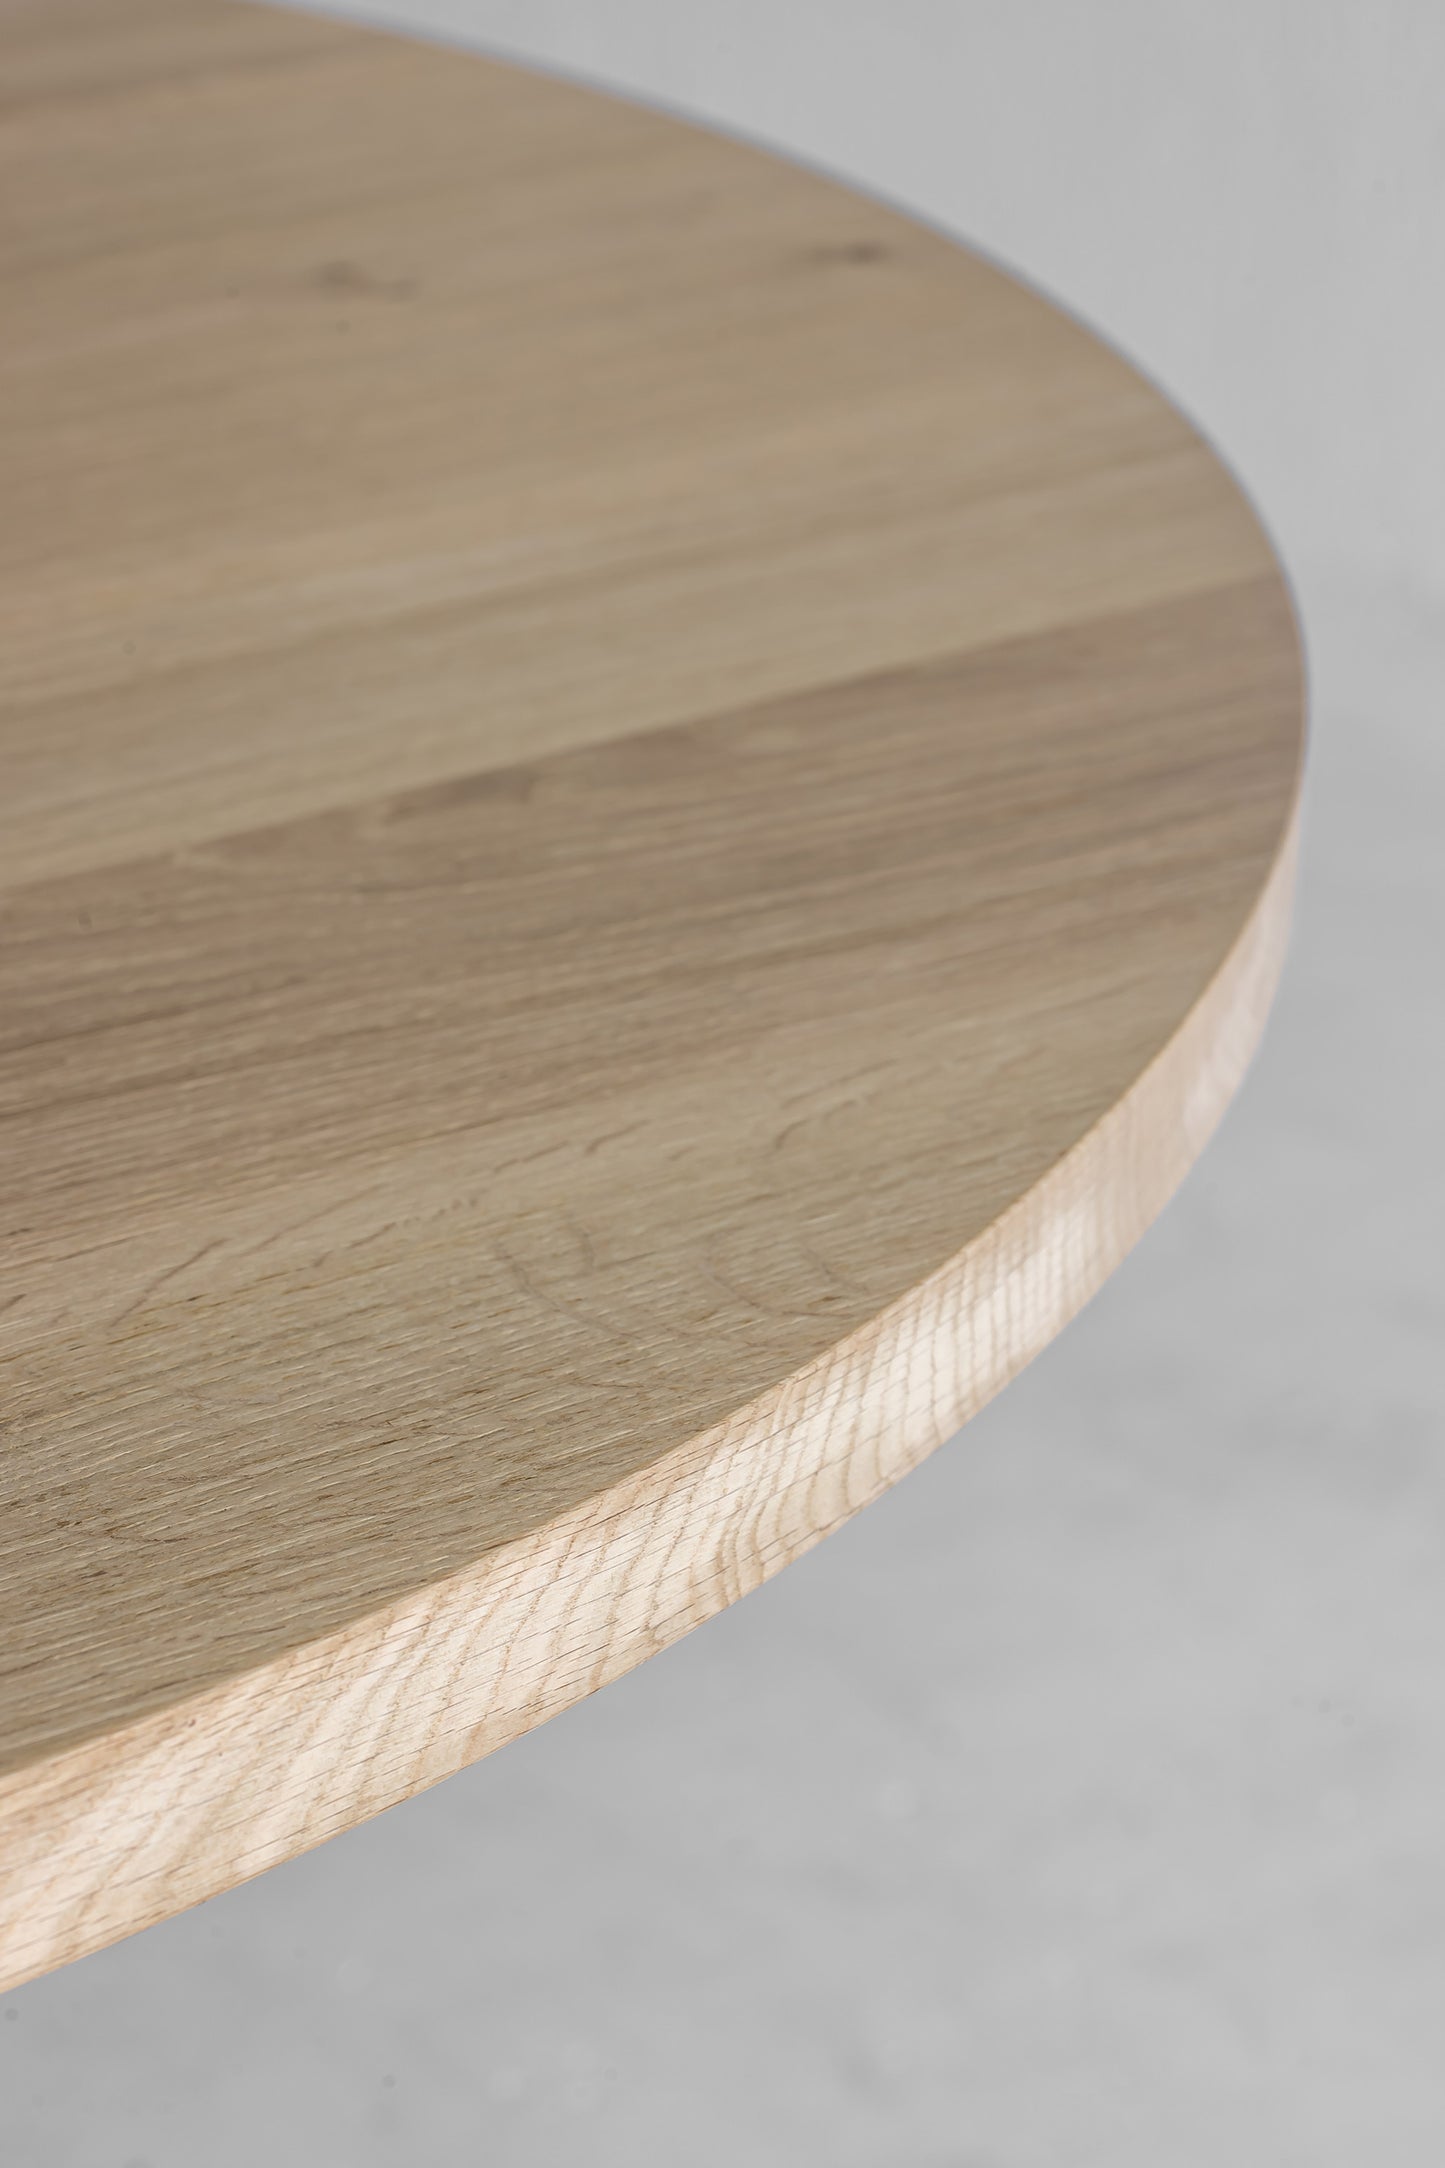 Details of Heerenhuis Brix Table Oak. - A beautiful round natural wood grain table top.